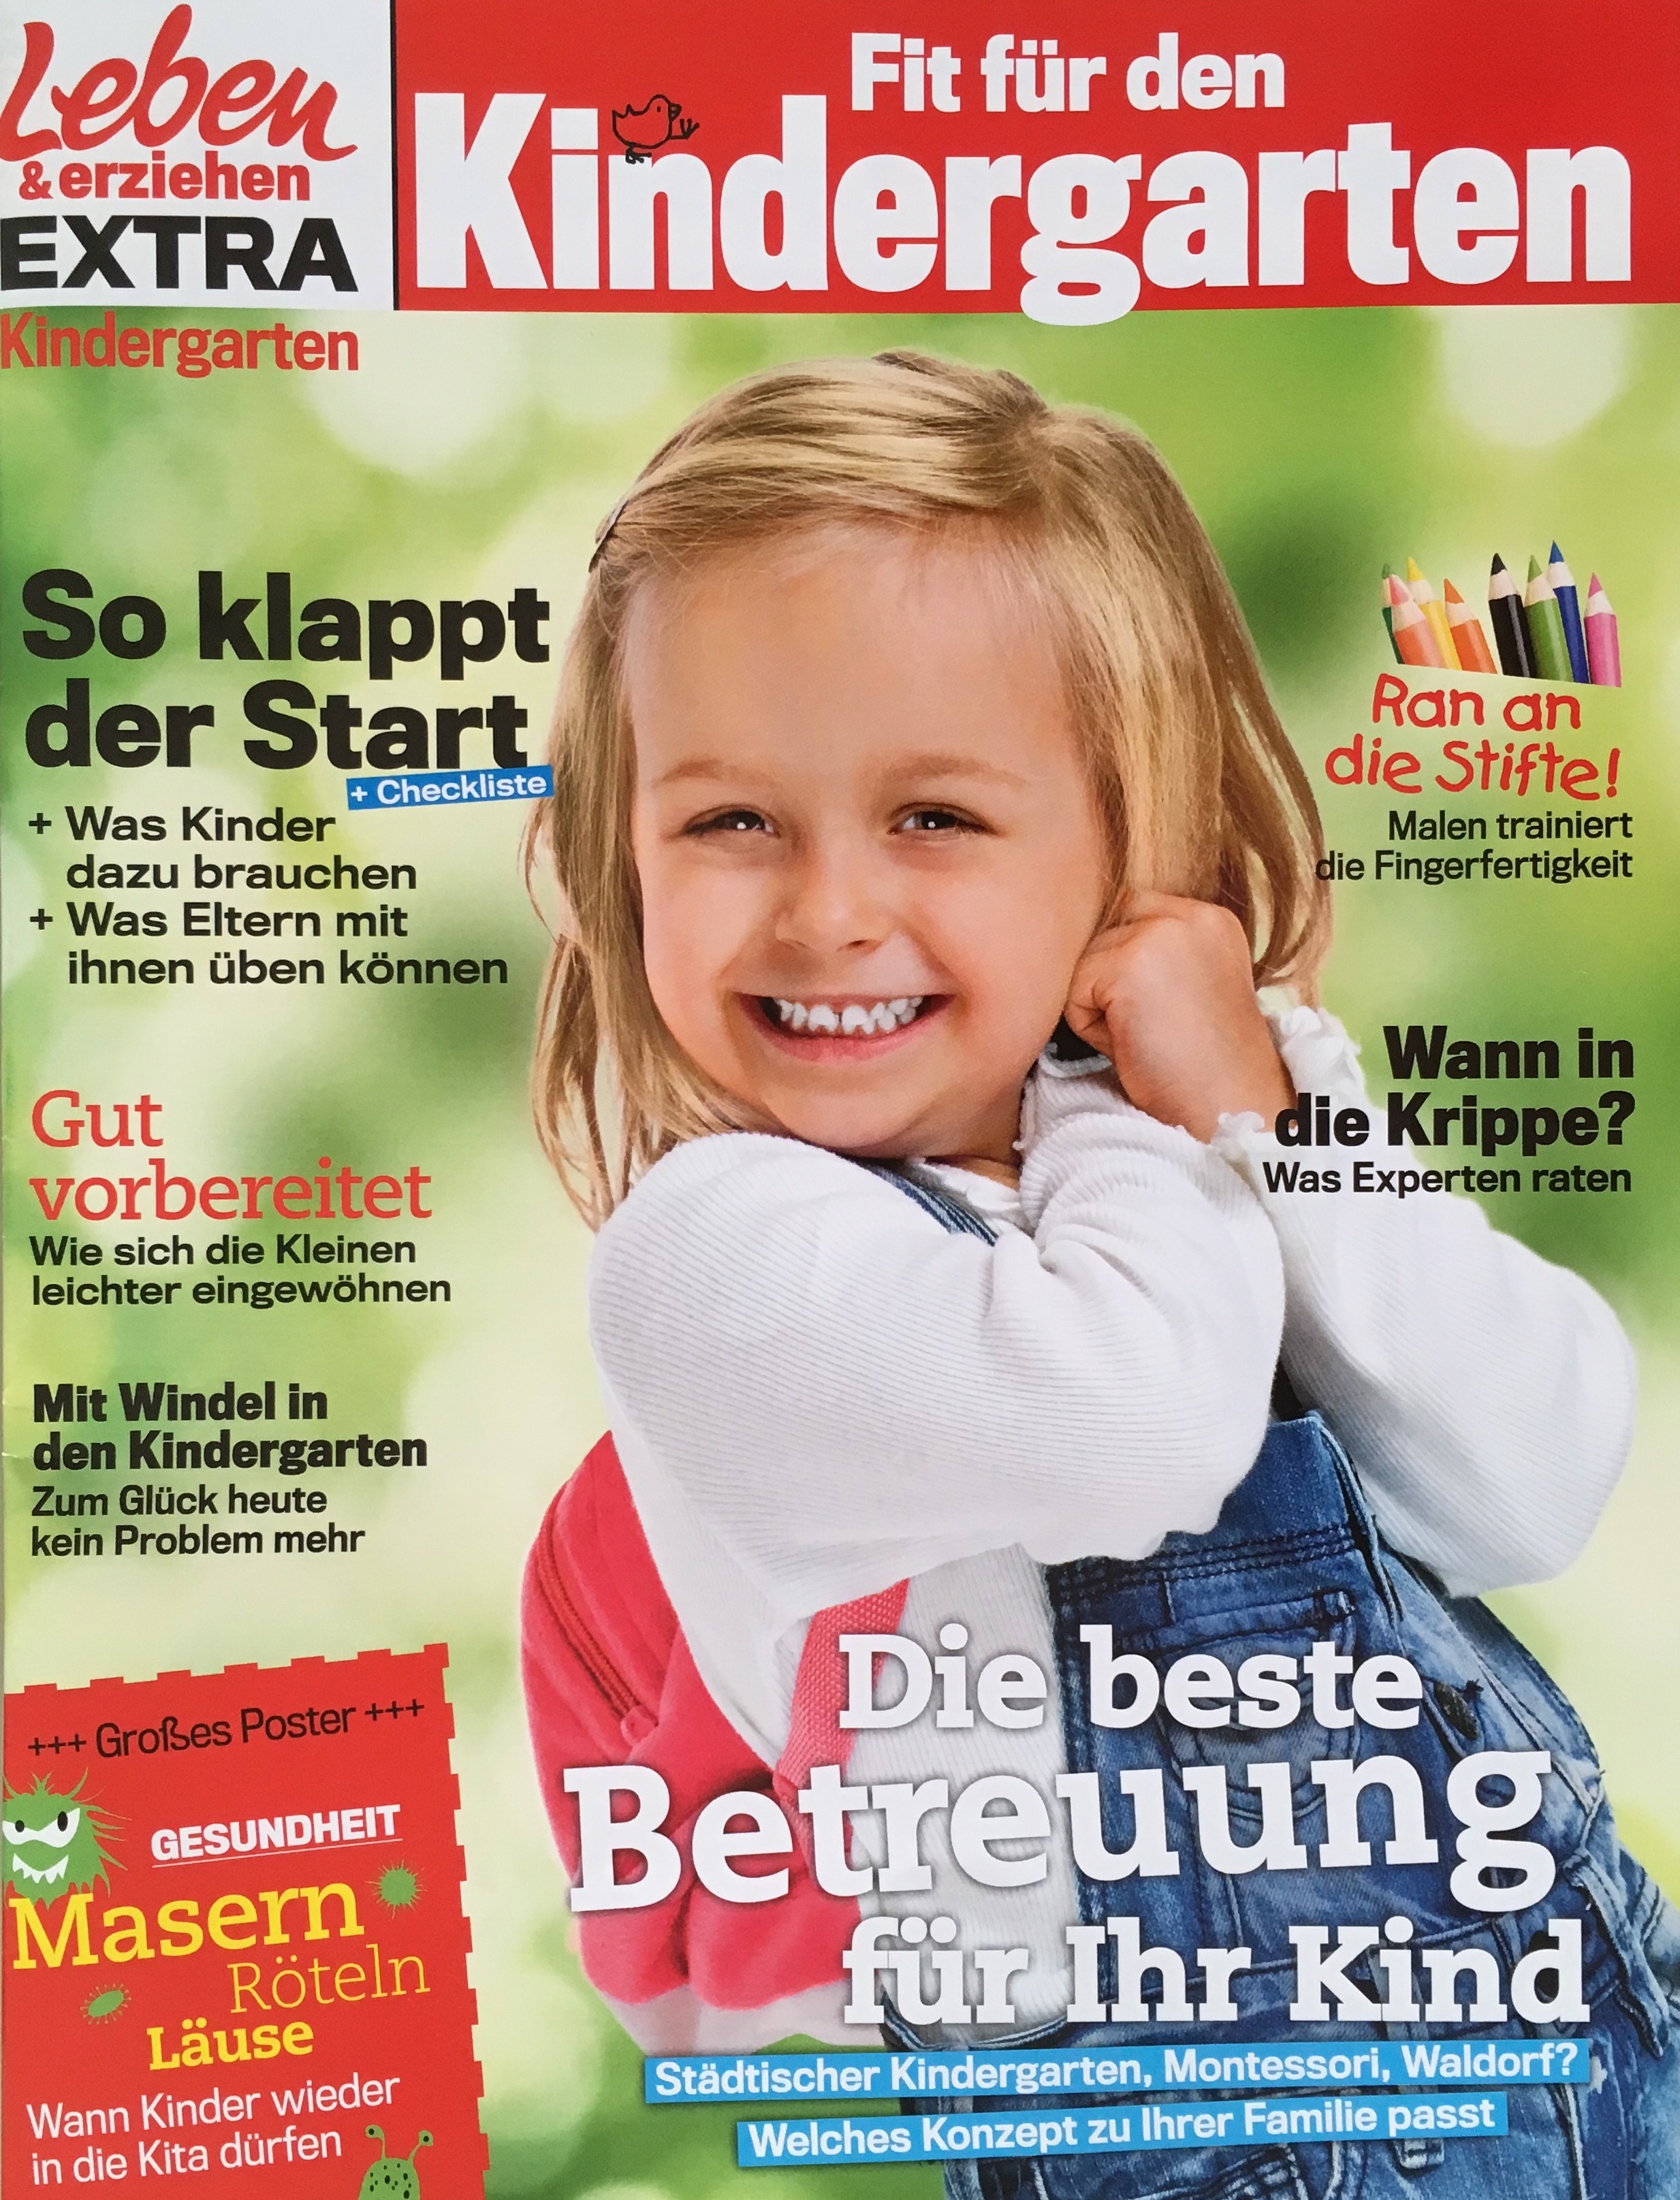 Leben-Erziehen-Extra-Kindergarten-2018